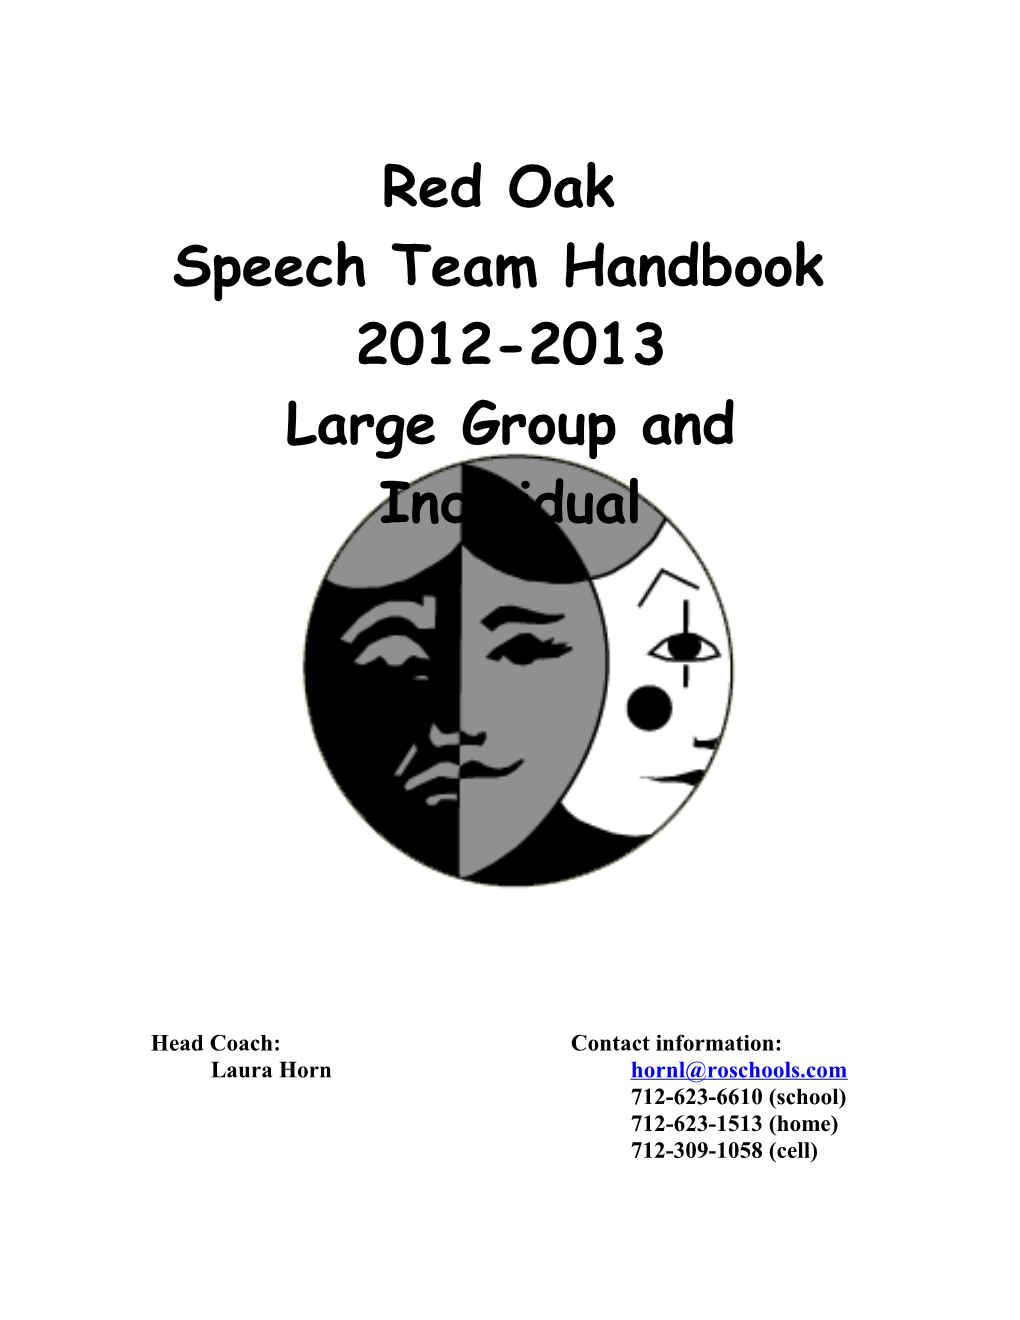 West Delaware Speech Team Handbook 07-08